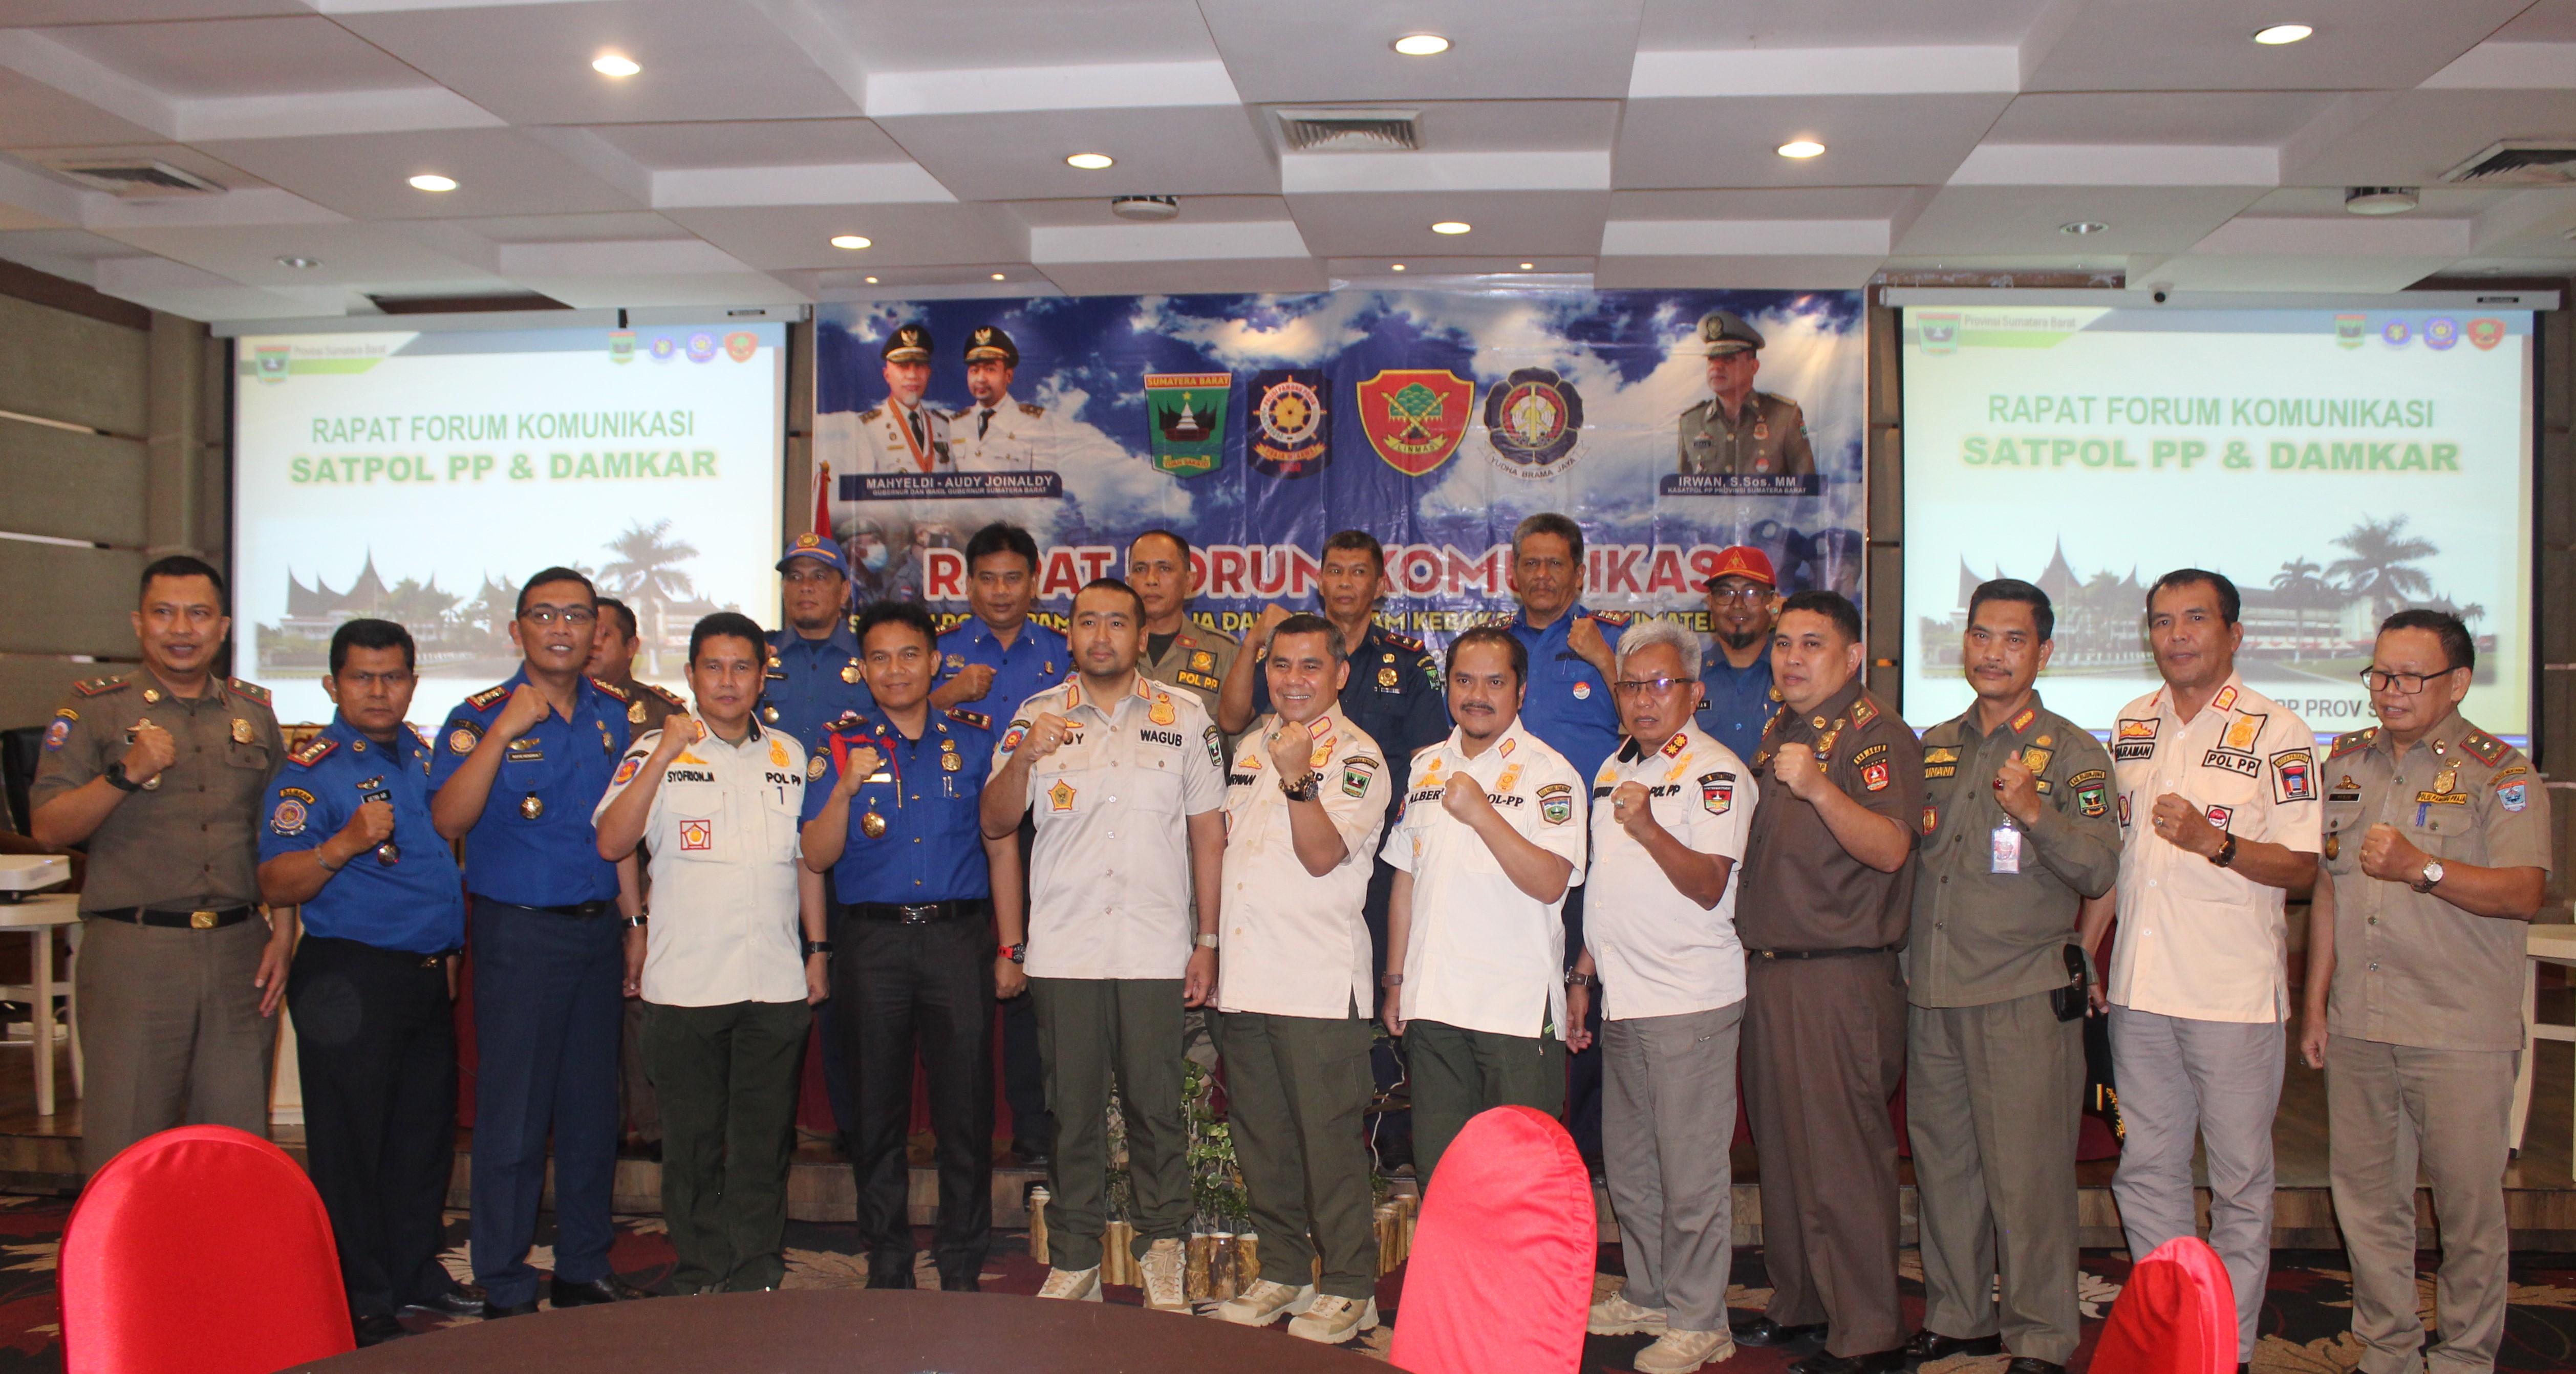 Rapat Forum  Komunikasi Satuan Polisi Pamong Praja dan Pemadam Kebakaran se-Sumatera Barat, Wagub Audy Joinaldy "Mari Ciptakan Satpol PP yang Humanis"